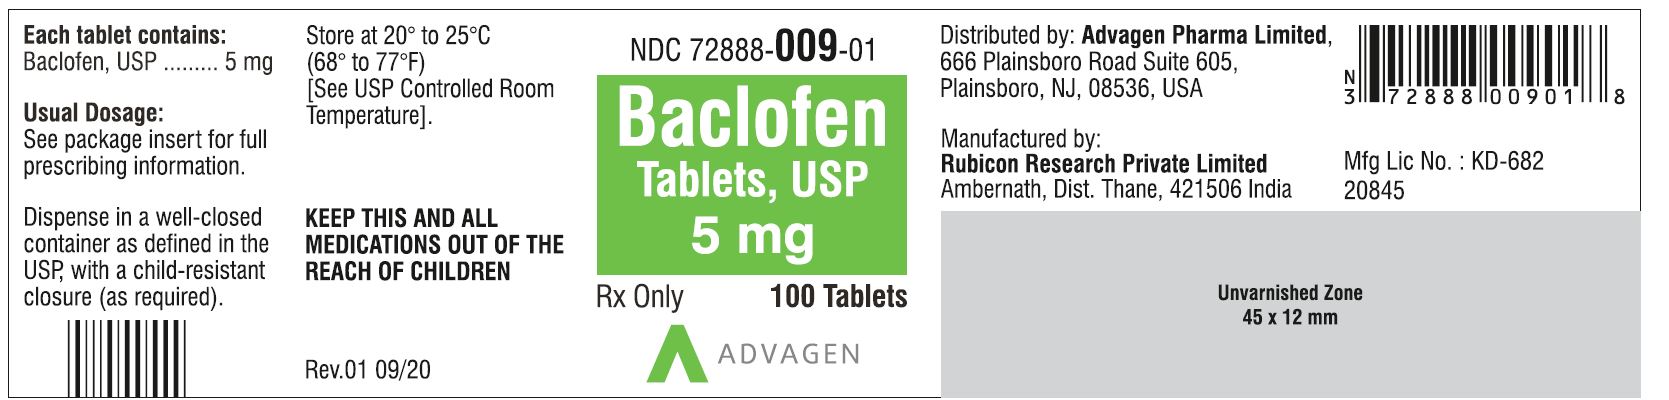 NDC 72888-009-01 - Baclofen Tablets, USP 5 mg - 100 Tablets